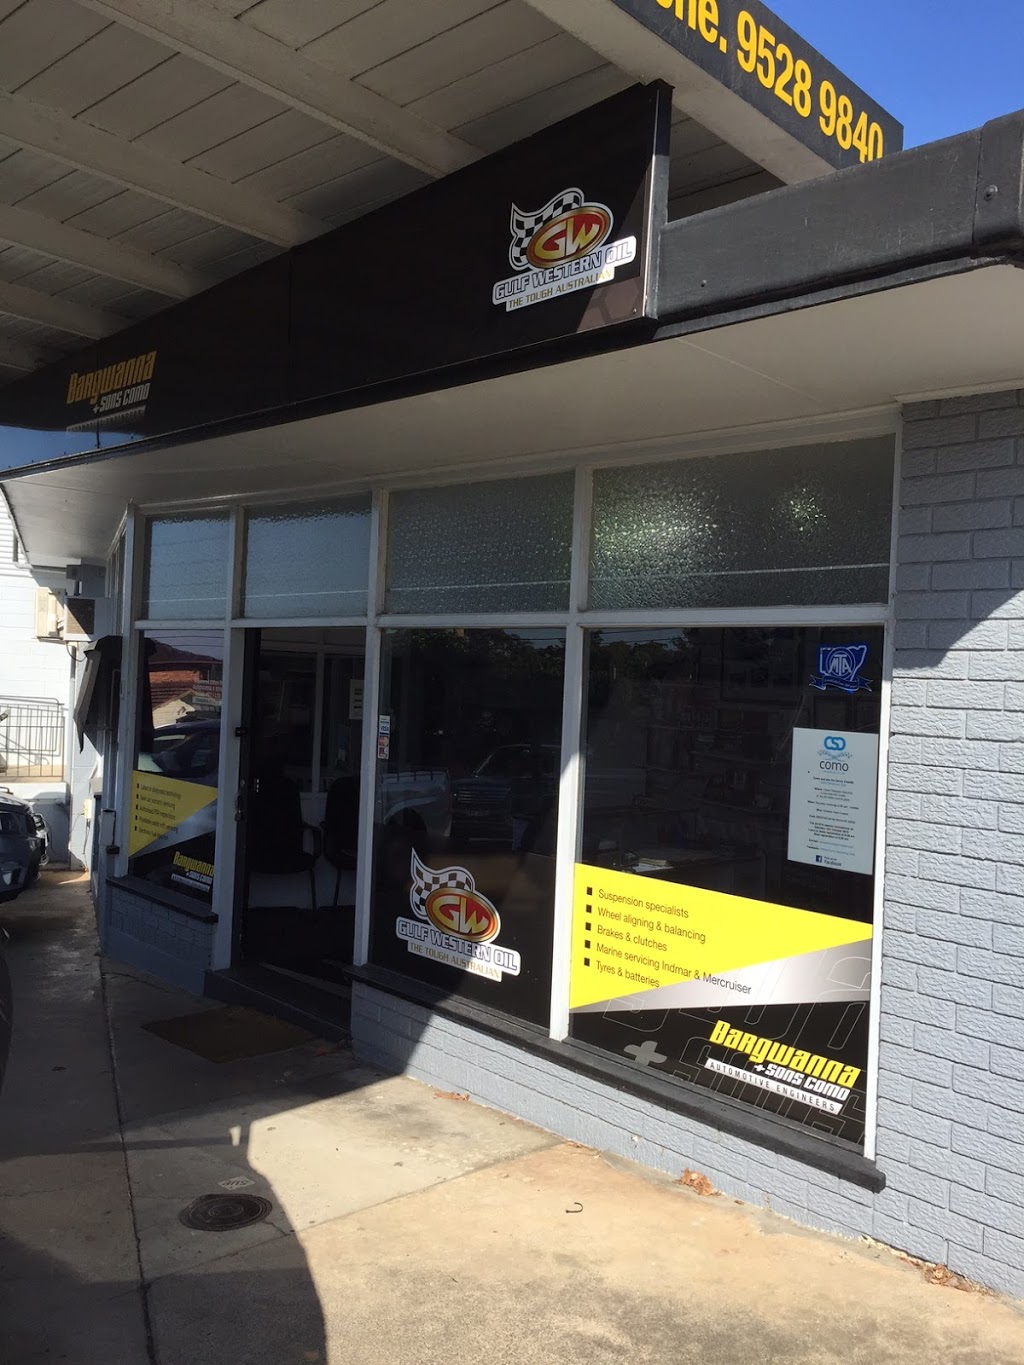 Bargwanna & Sons | car repair | 52 Wolger St, Como NSW 2226, Australia | 0295289840 OR +61 2 9528 9840